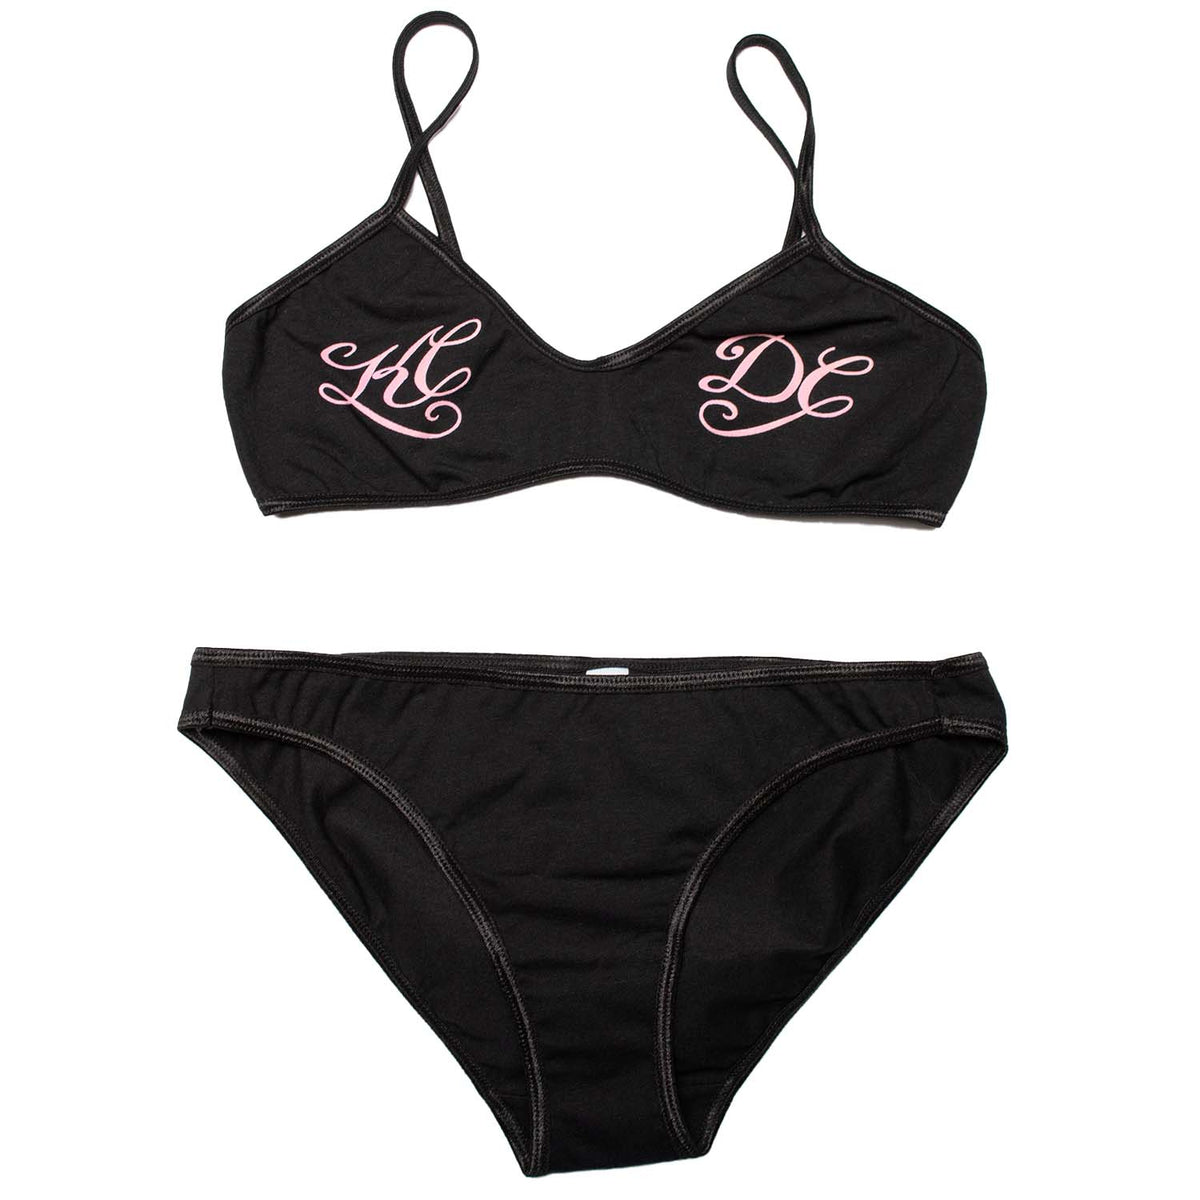 Black bikini panty with pink KCDC script printed on butt. Pair with black KCDC pink script print bralette for the full set. 